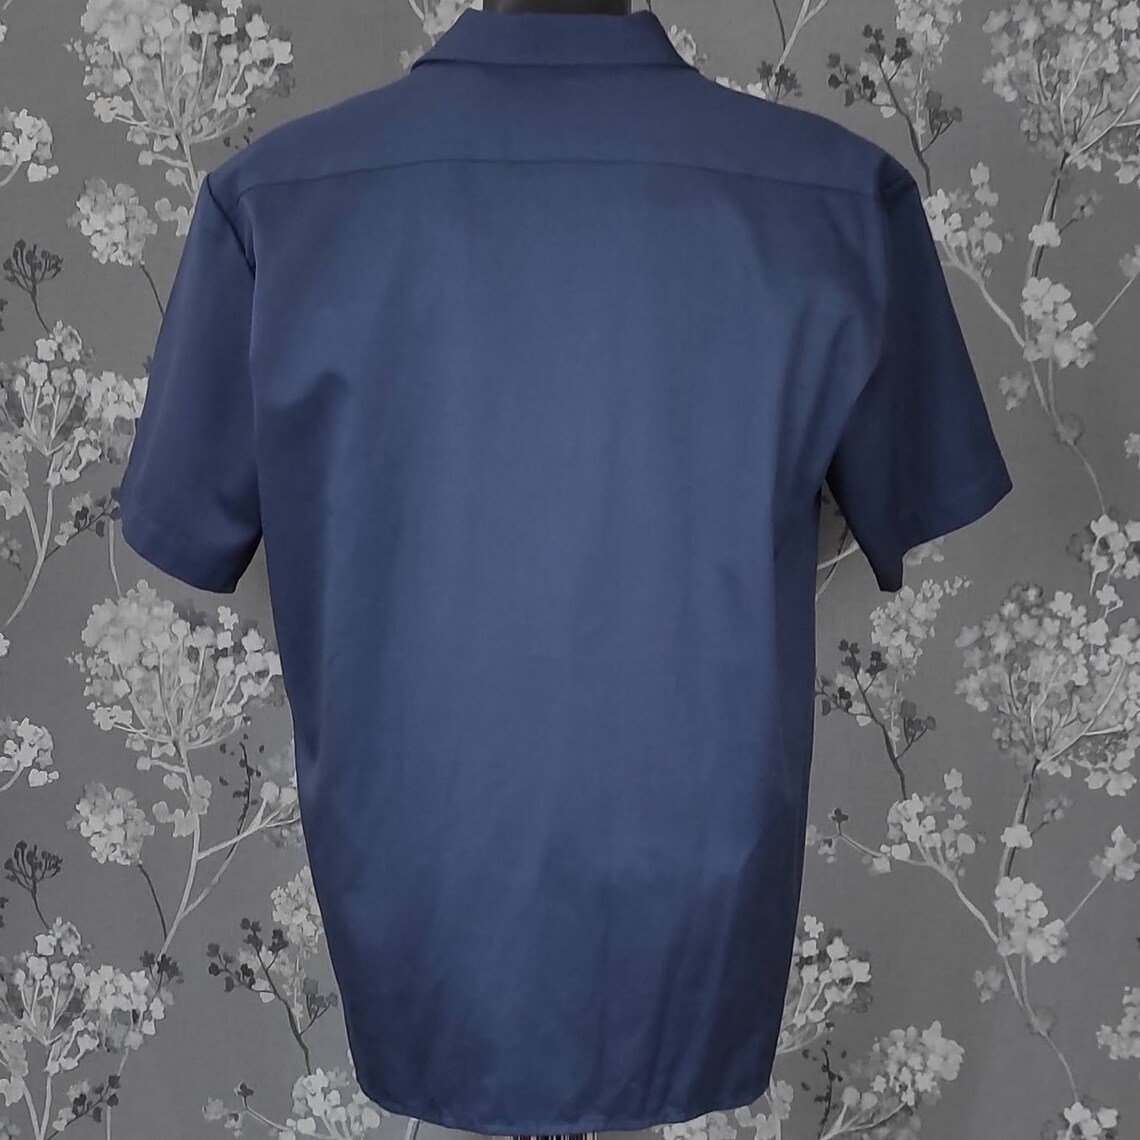 Dickies short sleeve work shirt navy blue. Size L | Etsy